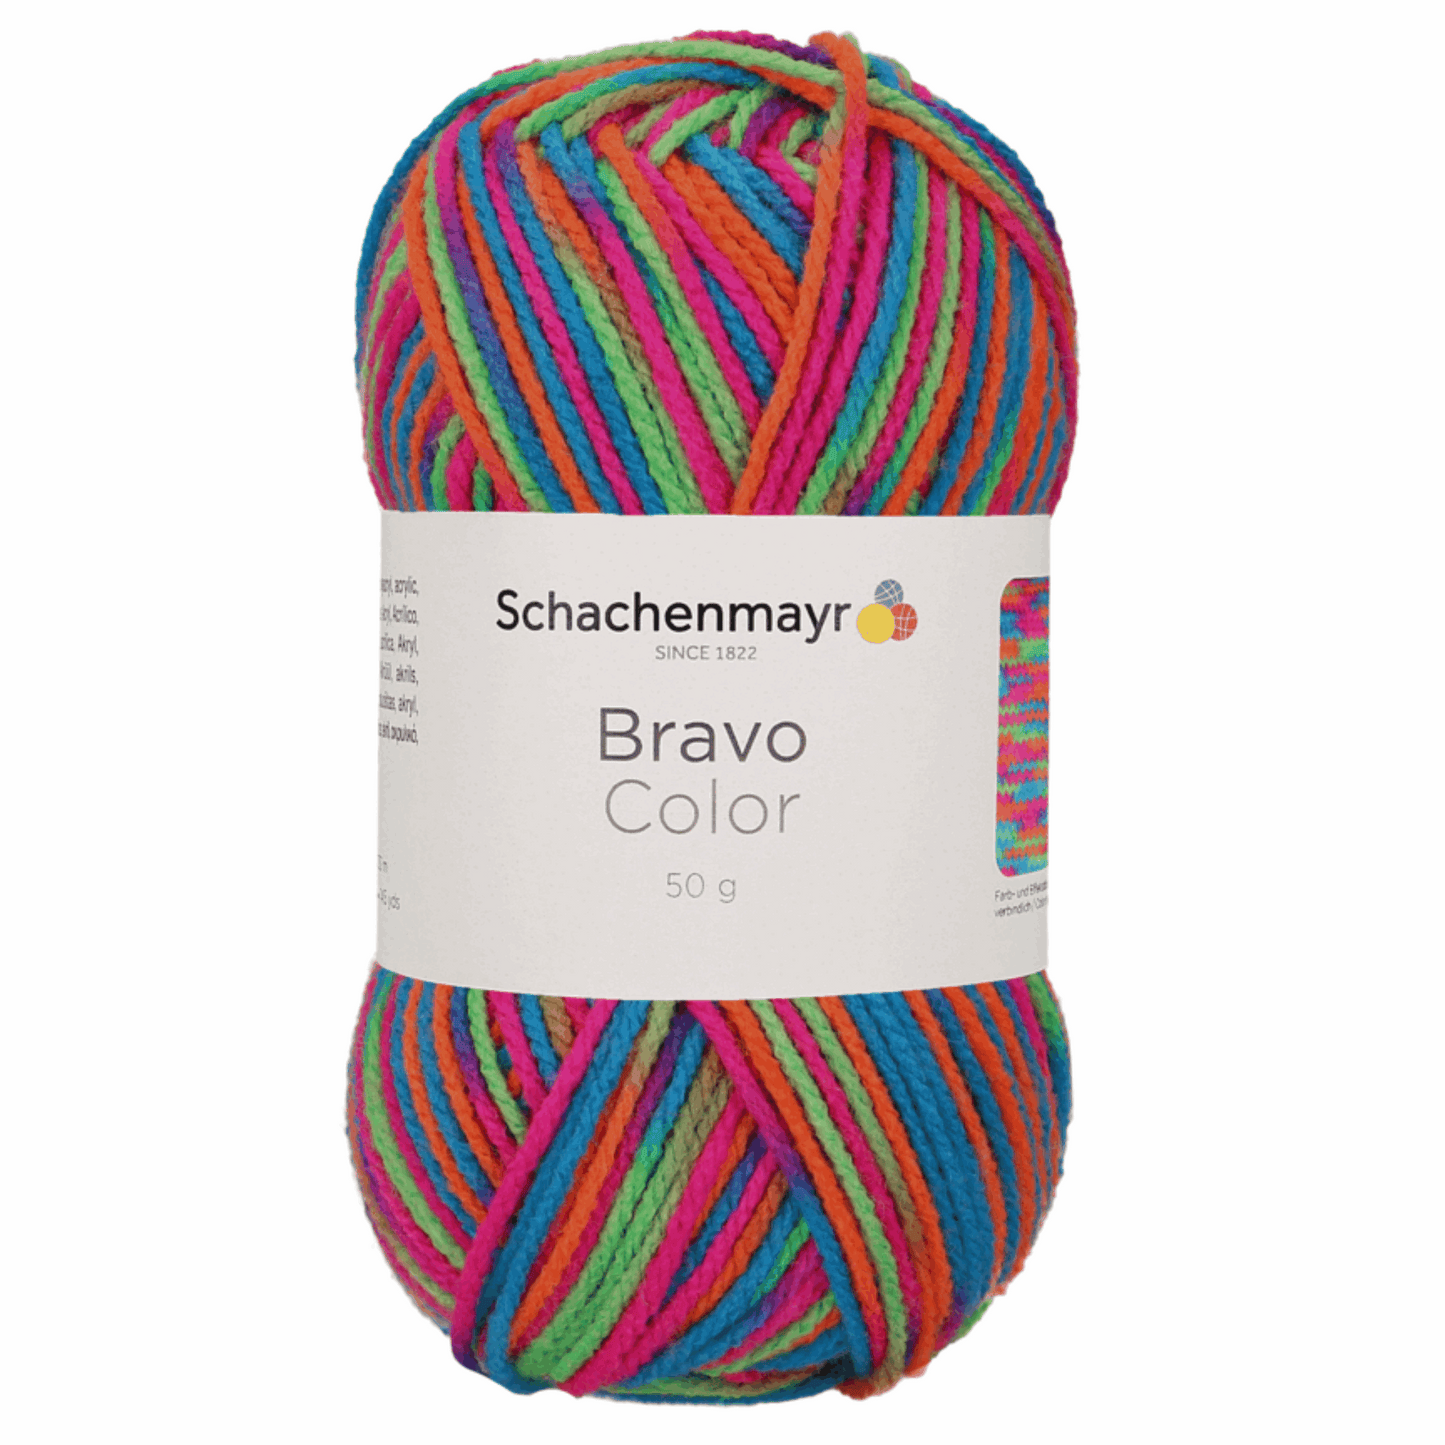 Schachenmayr Bravo Color 50g, 90421, Farbe Electra Color 95